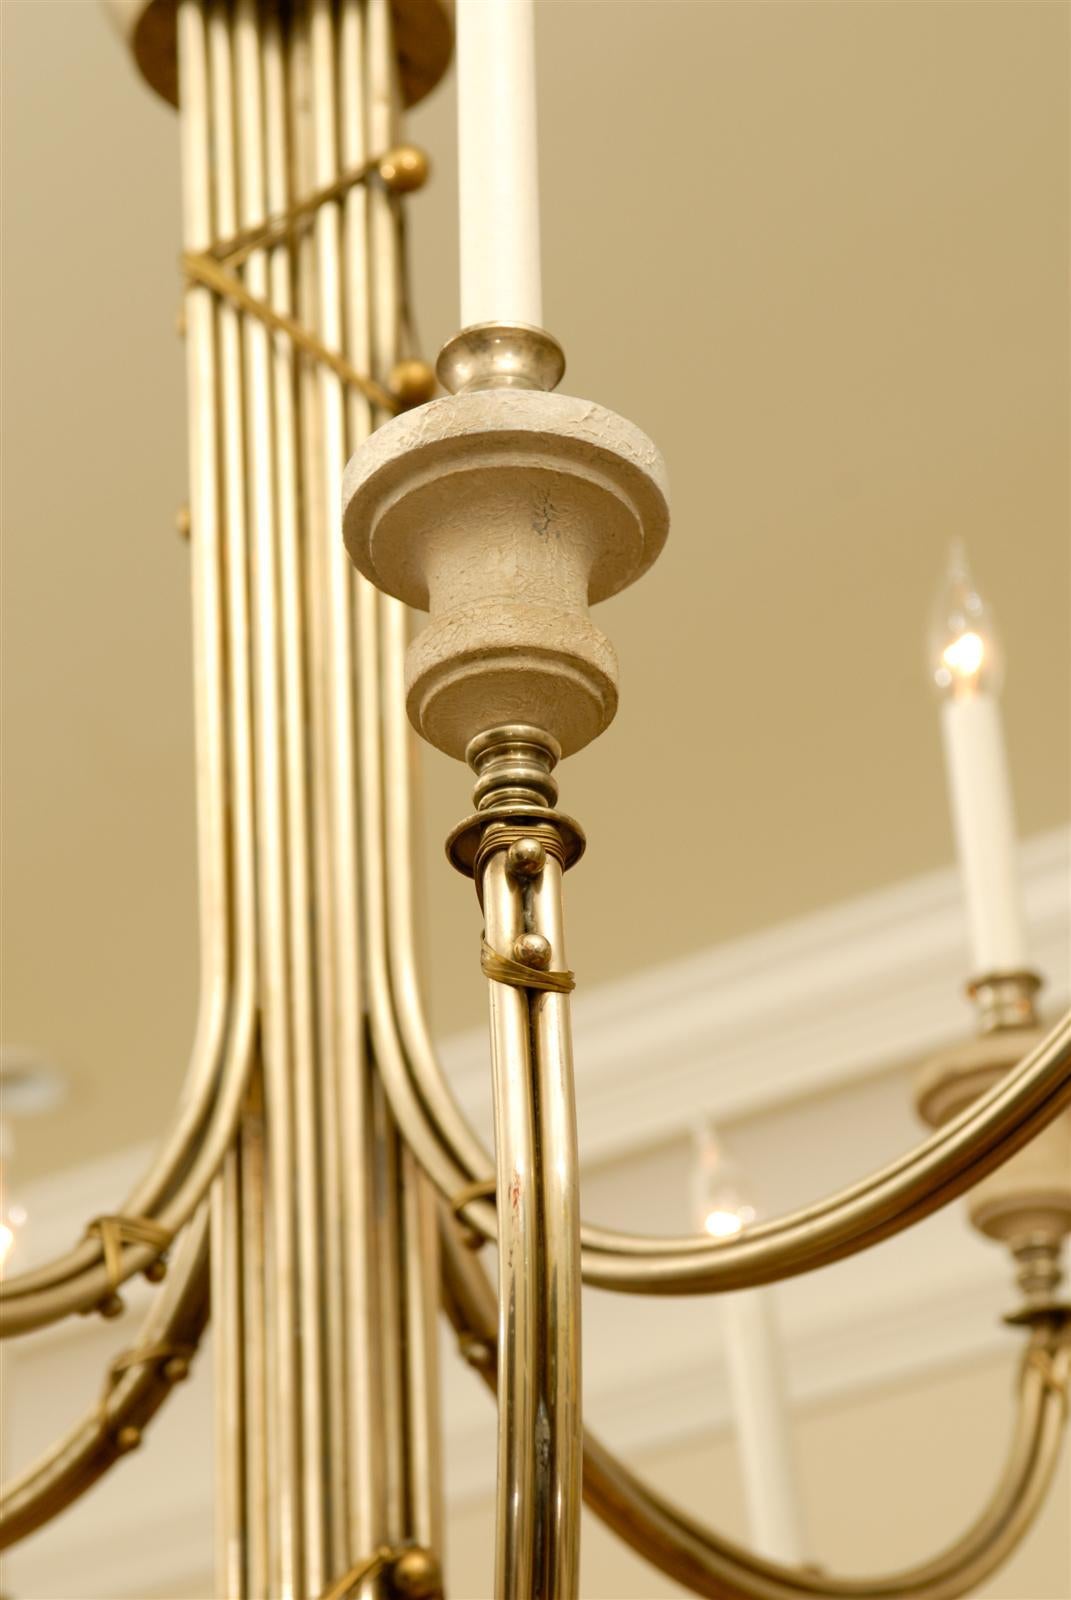 elegant modern chandelier